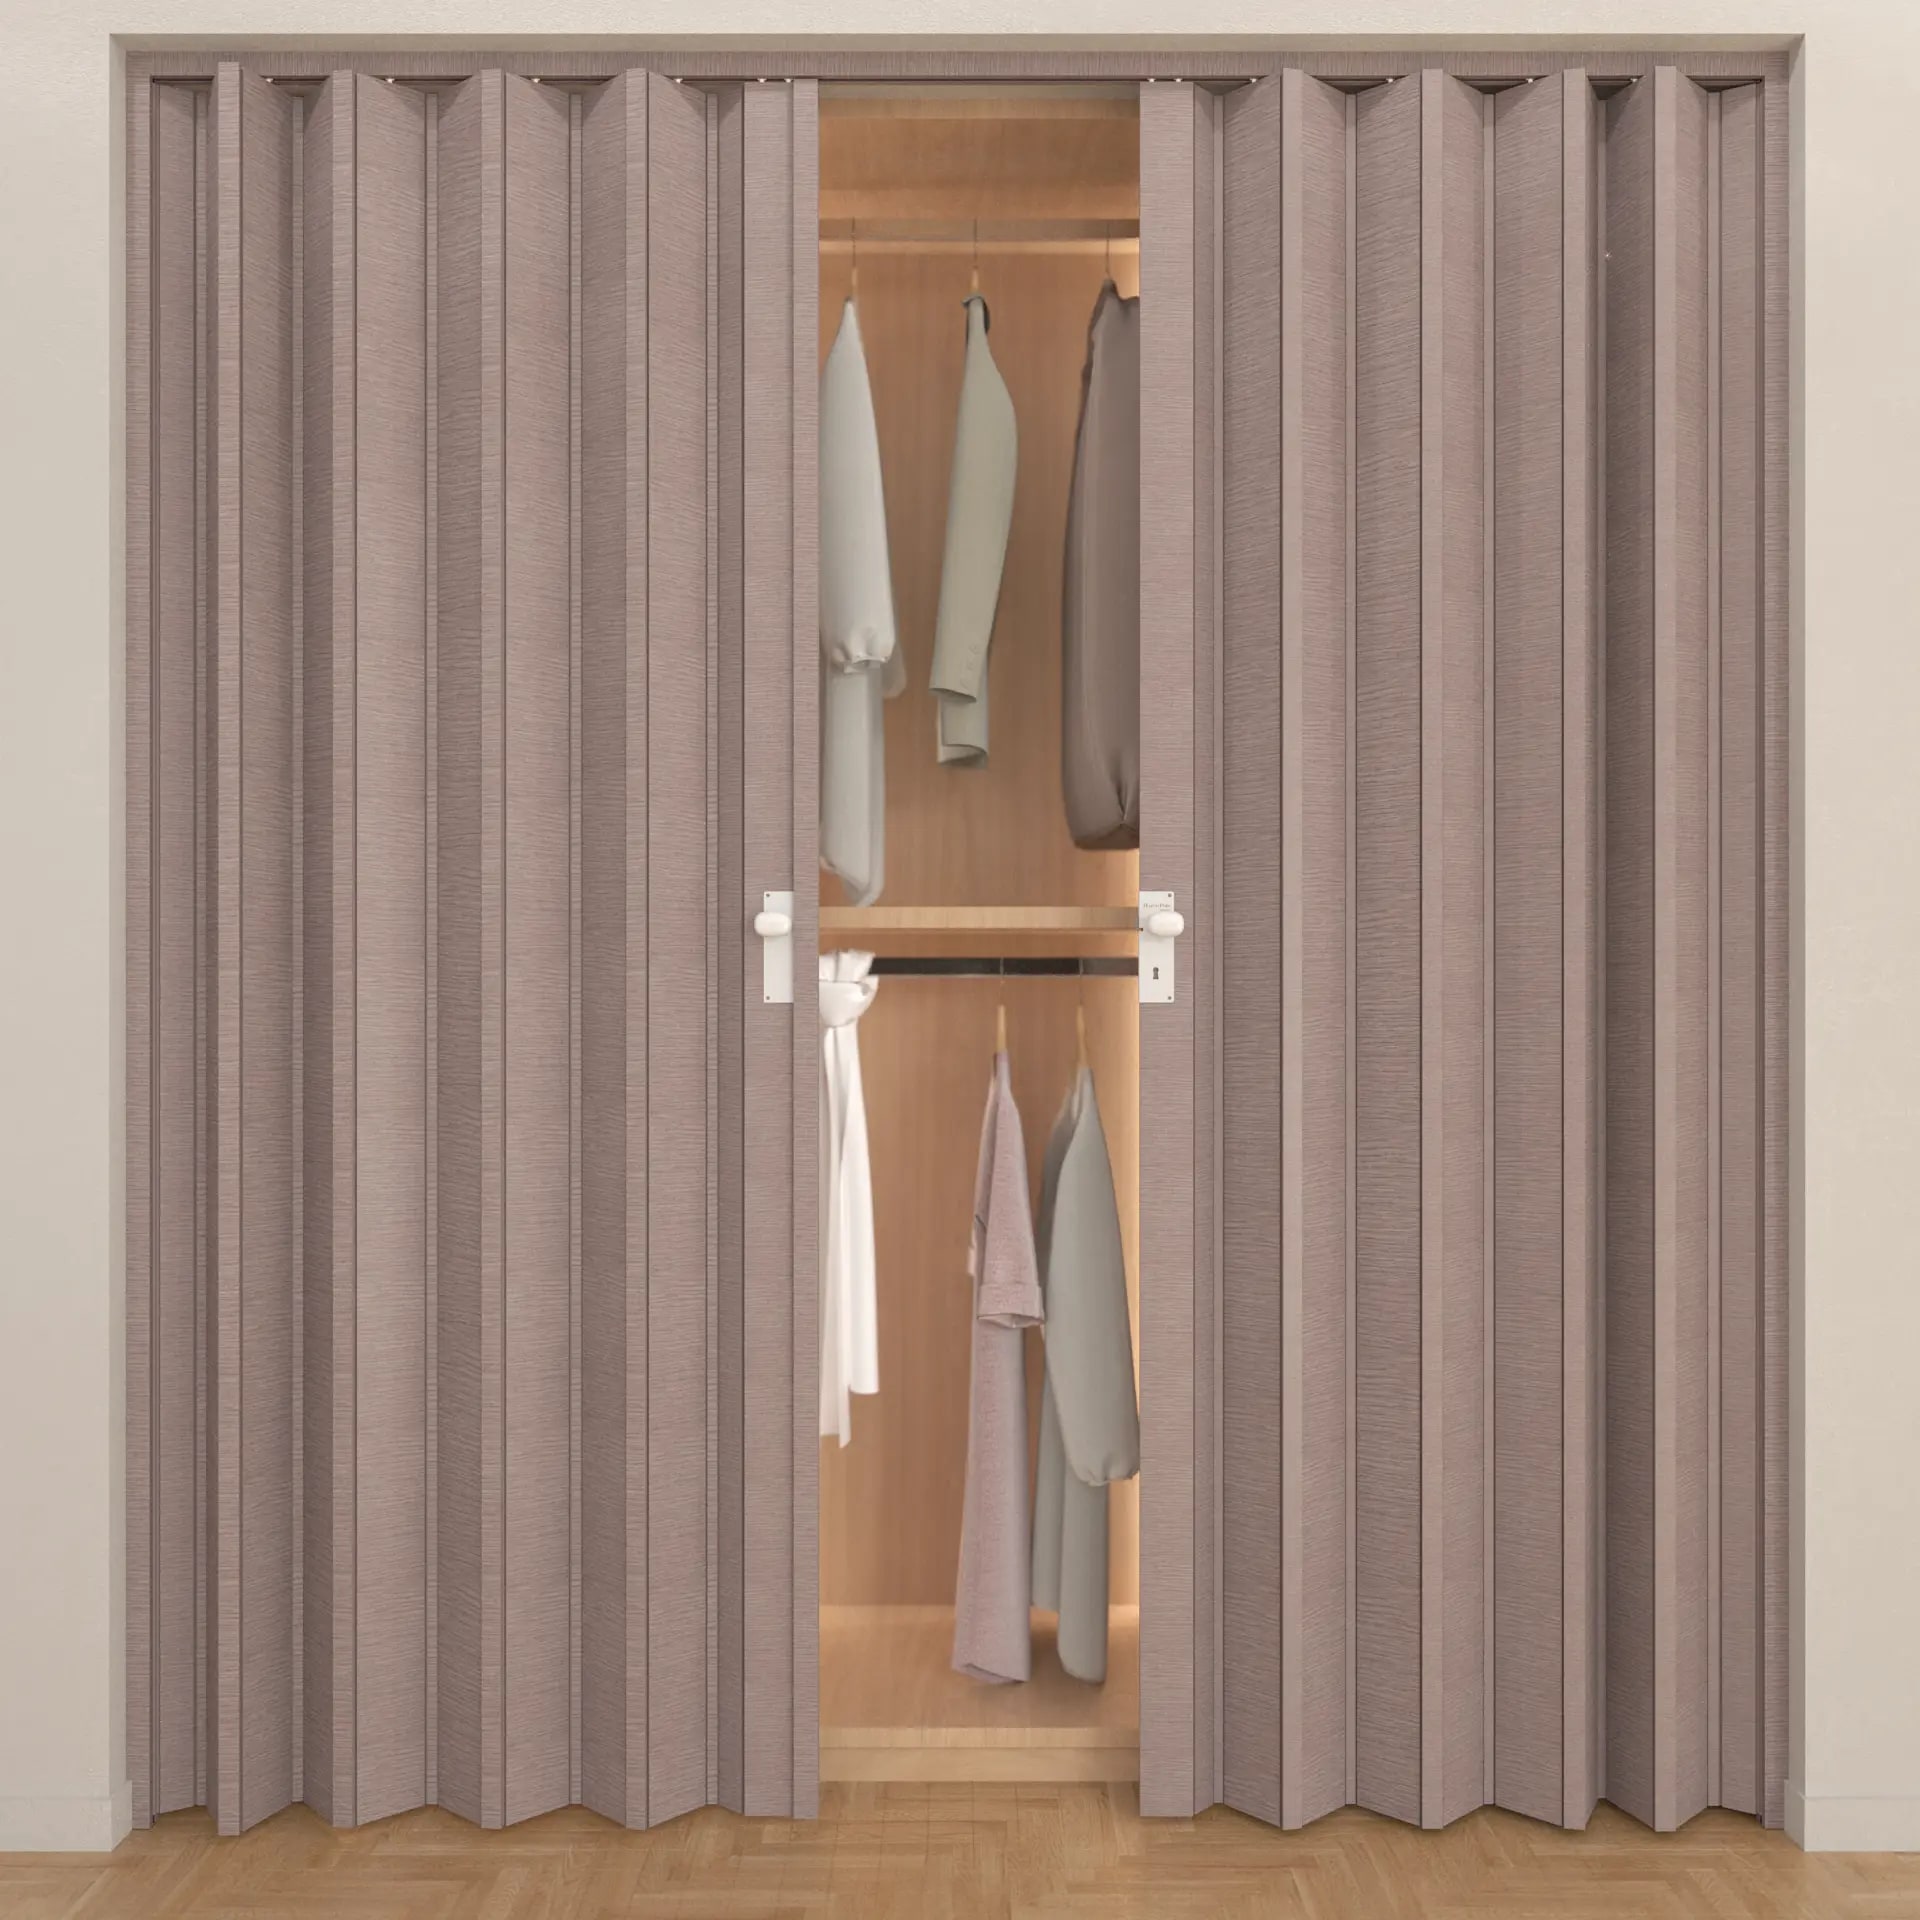 Wood-look Folding Doors